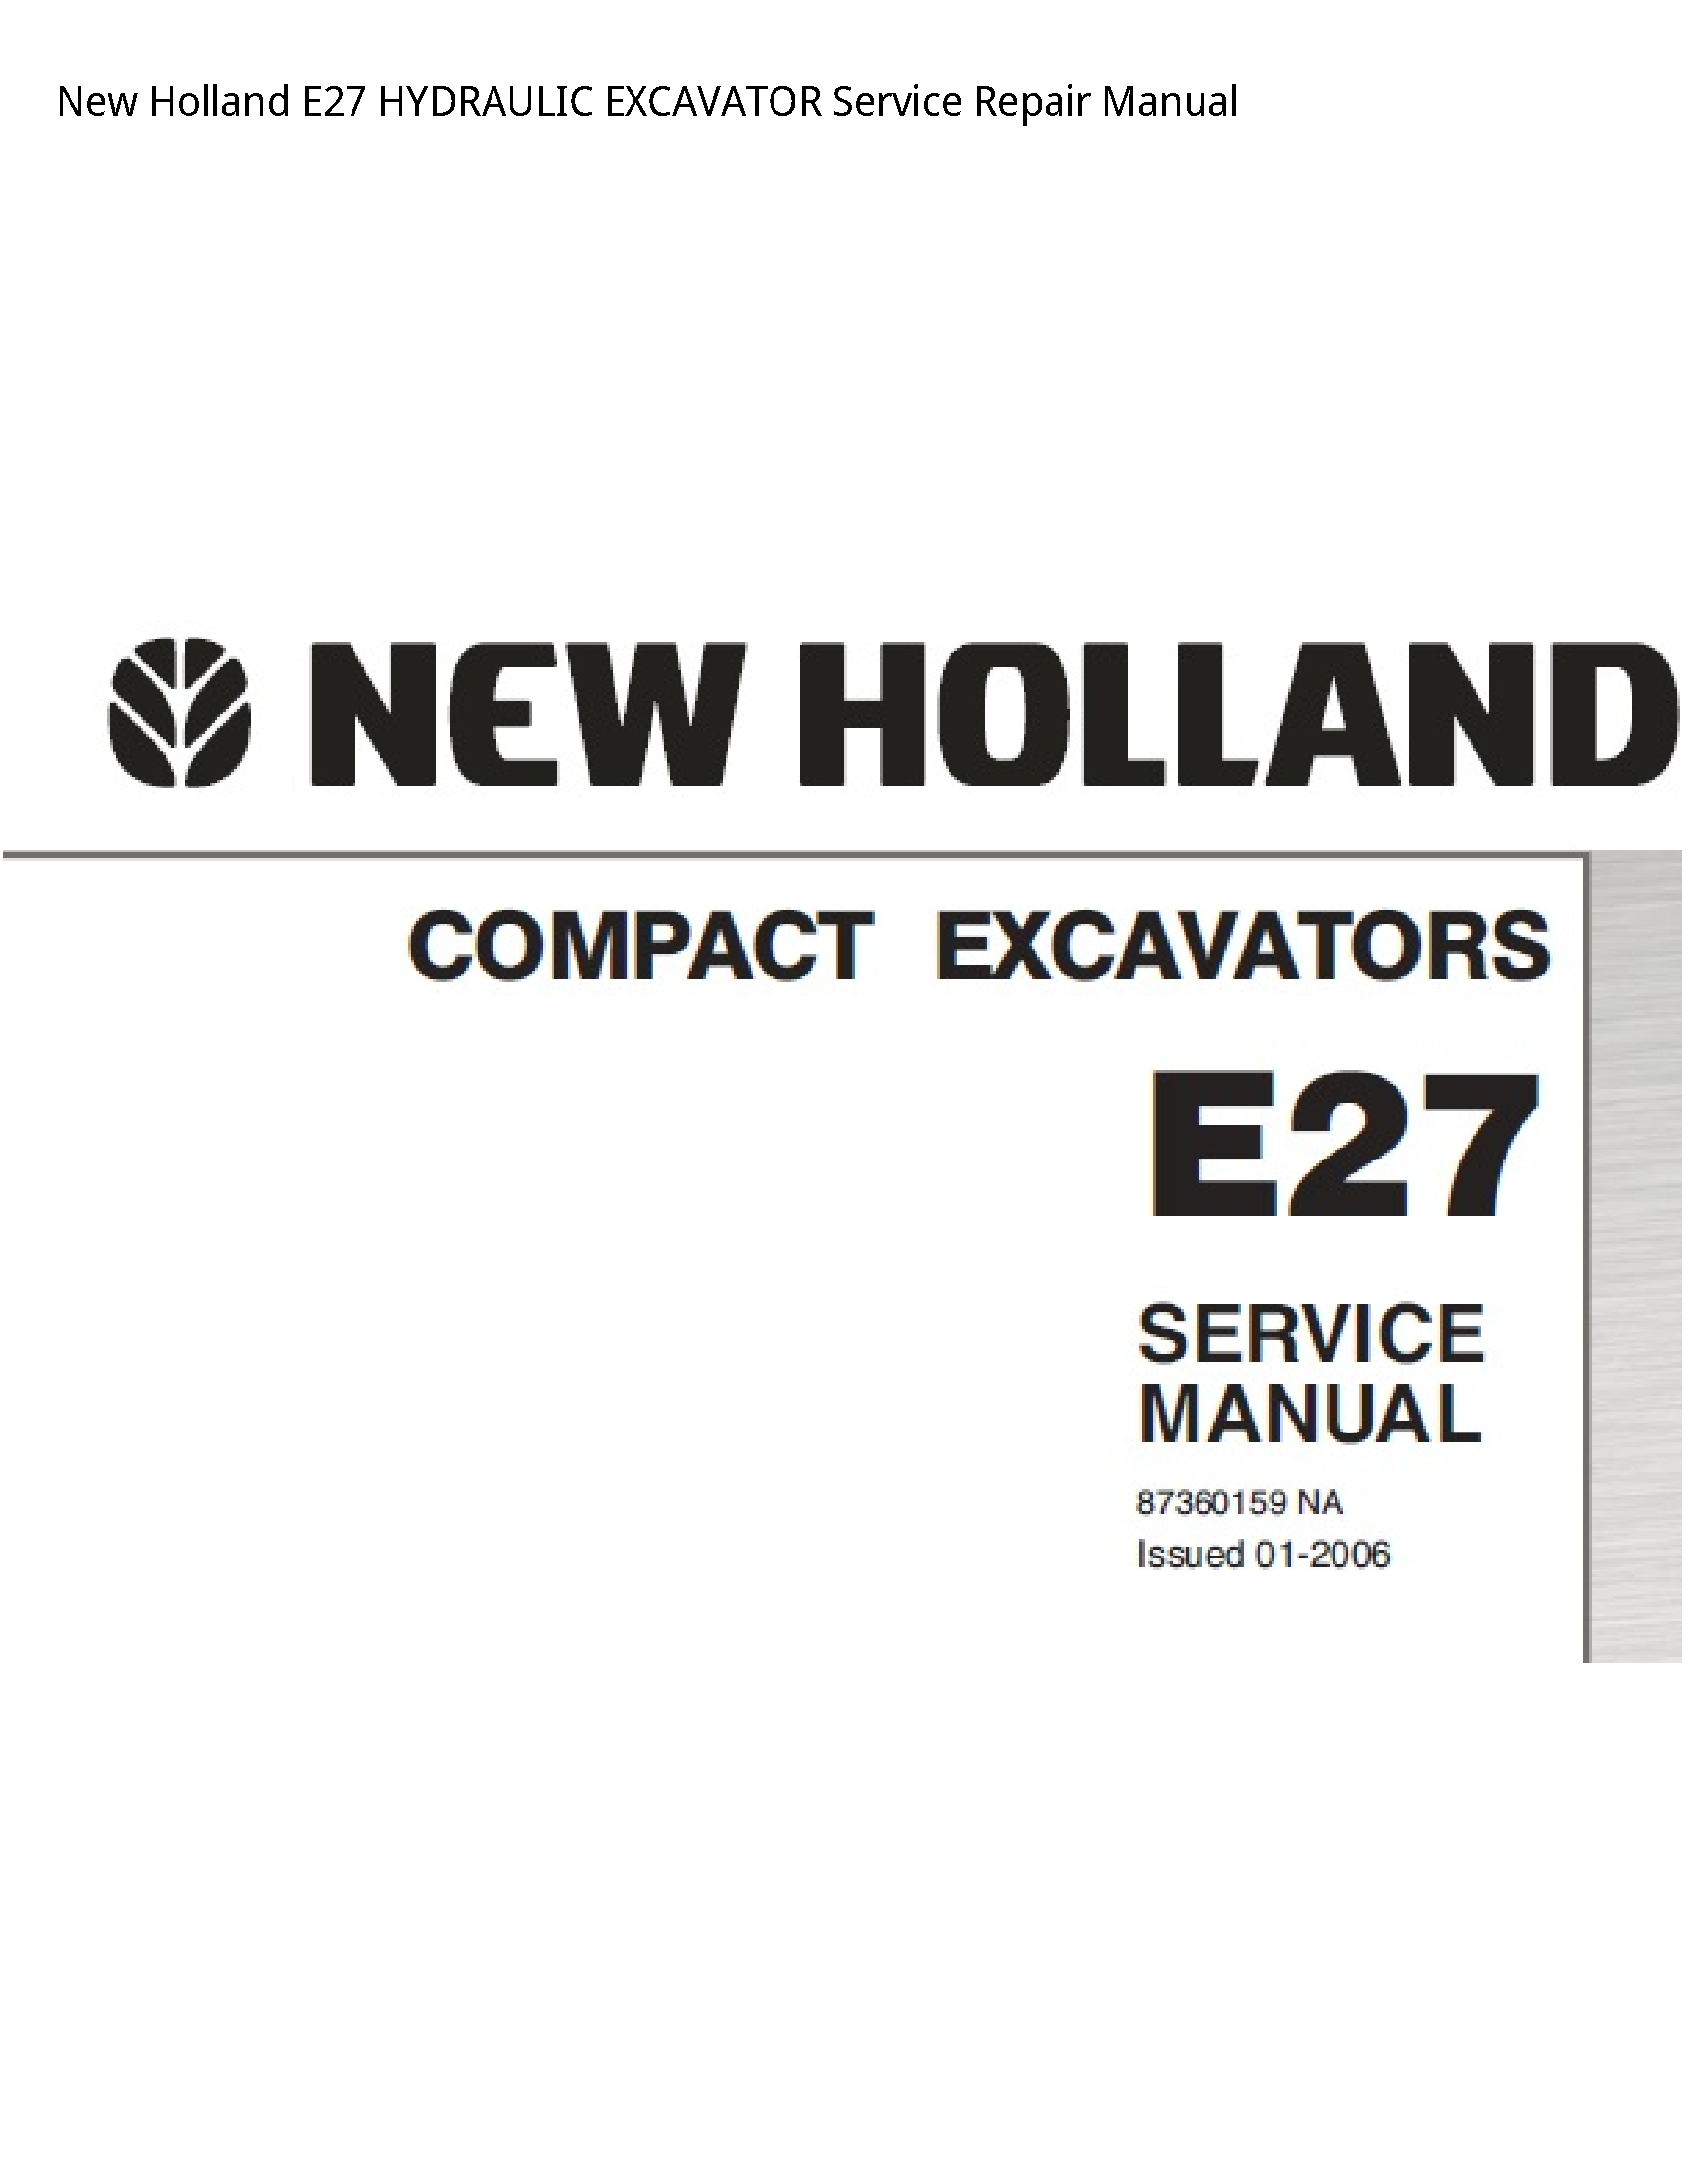 New Holland E27 HYDRAULIC EXCAVATOR manual